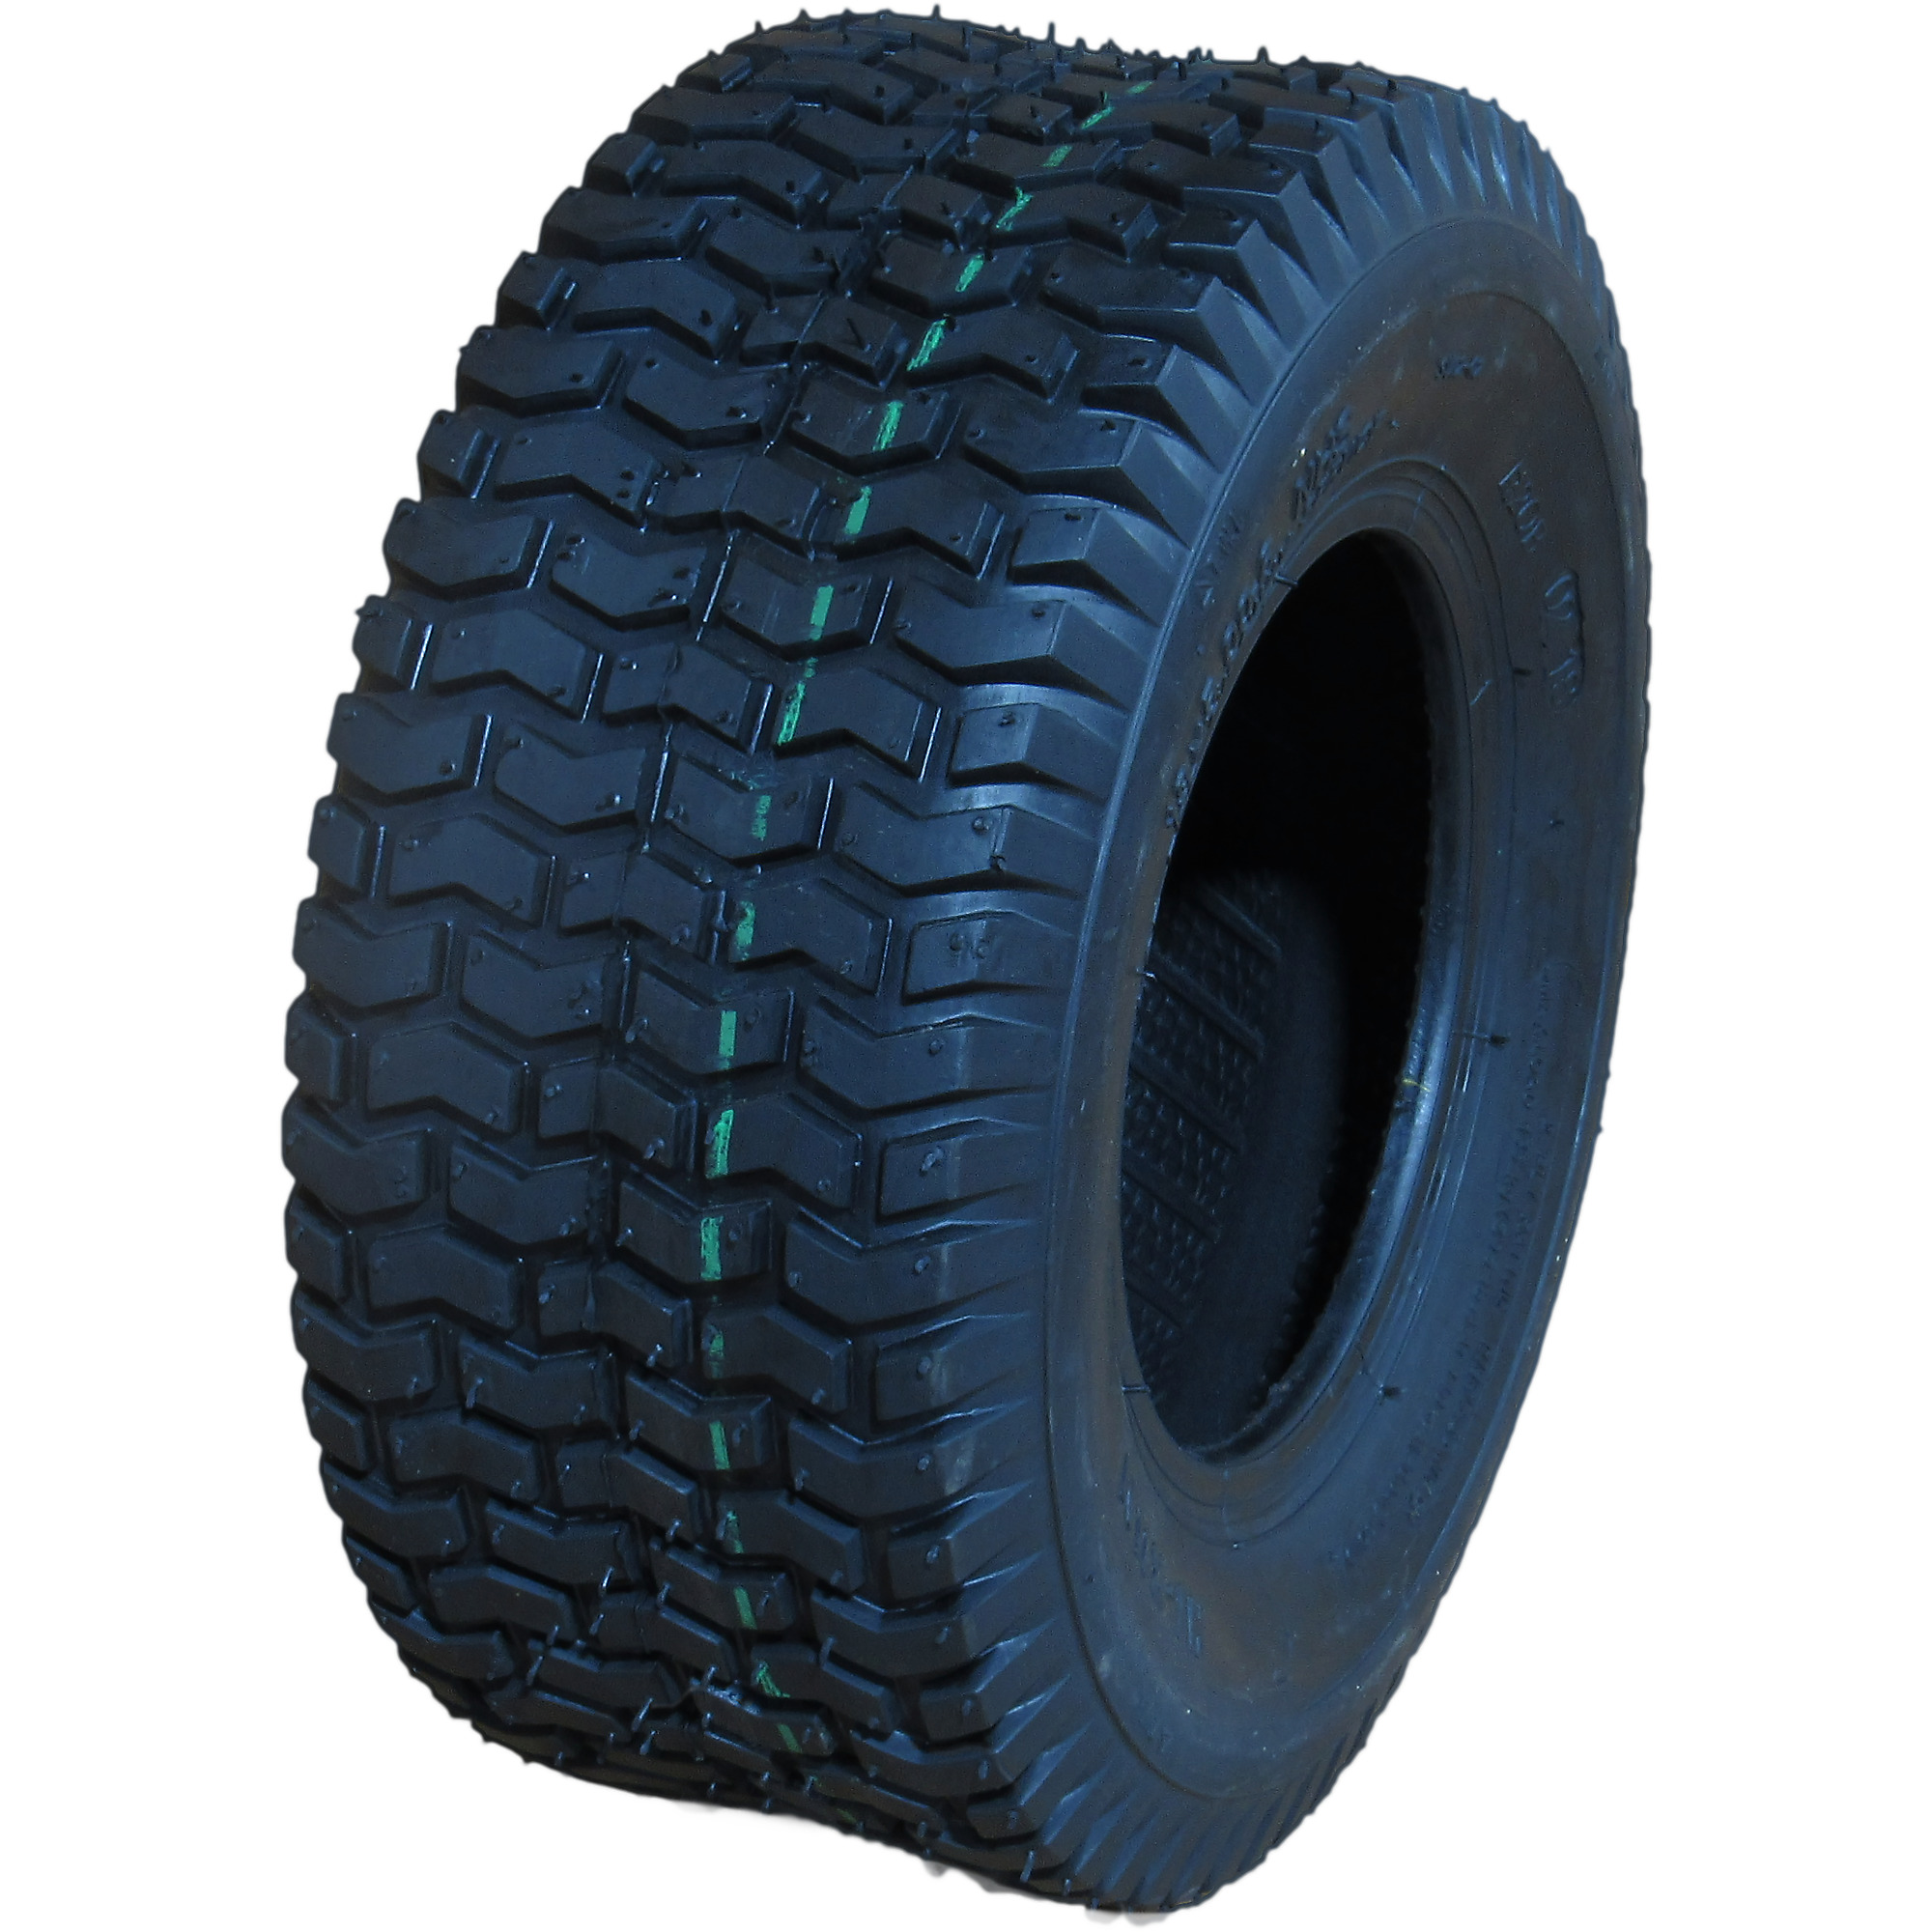 Lawn Garden Tire, SU12 Turf II, Tire Size 13X5.00-6, Load Range Rating A, Model - HI-RUN WD1093